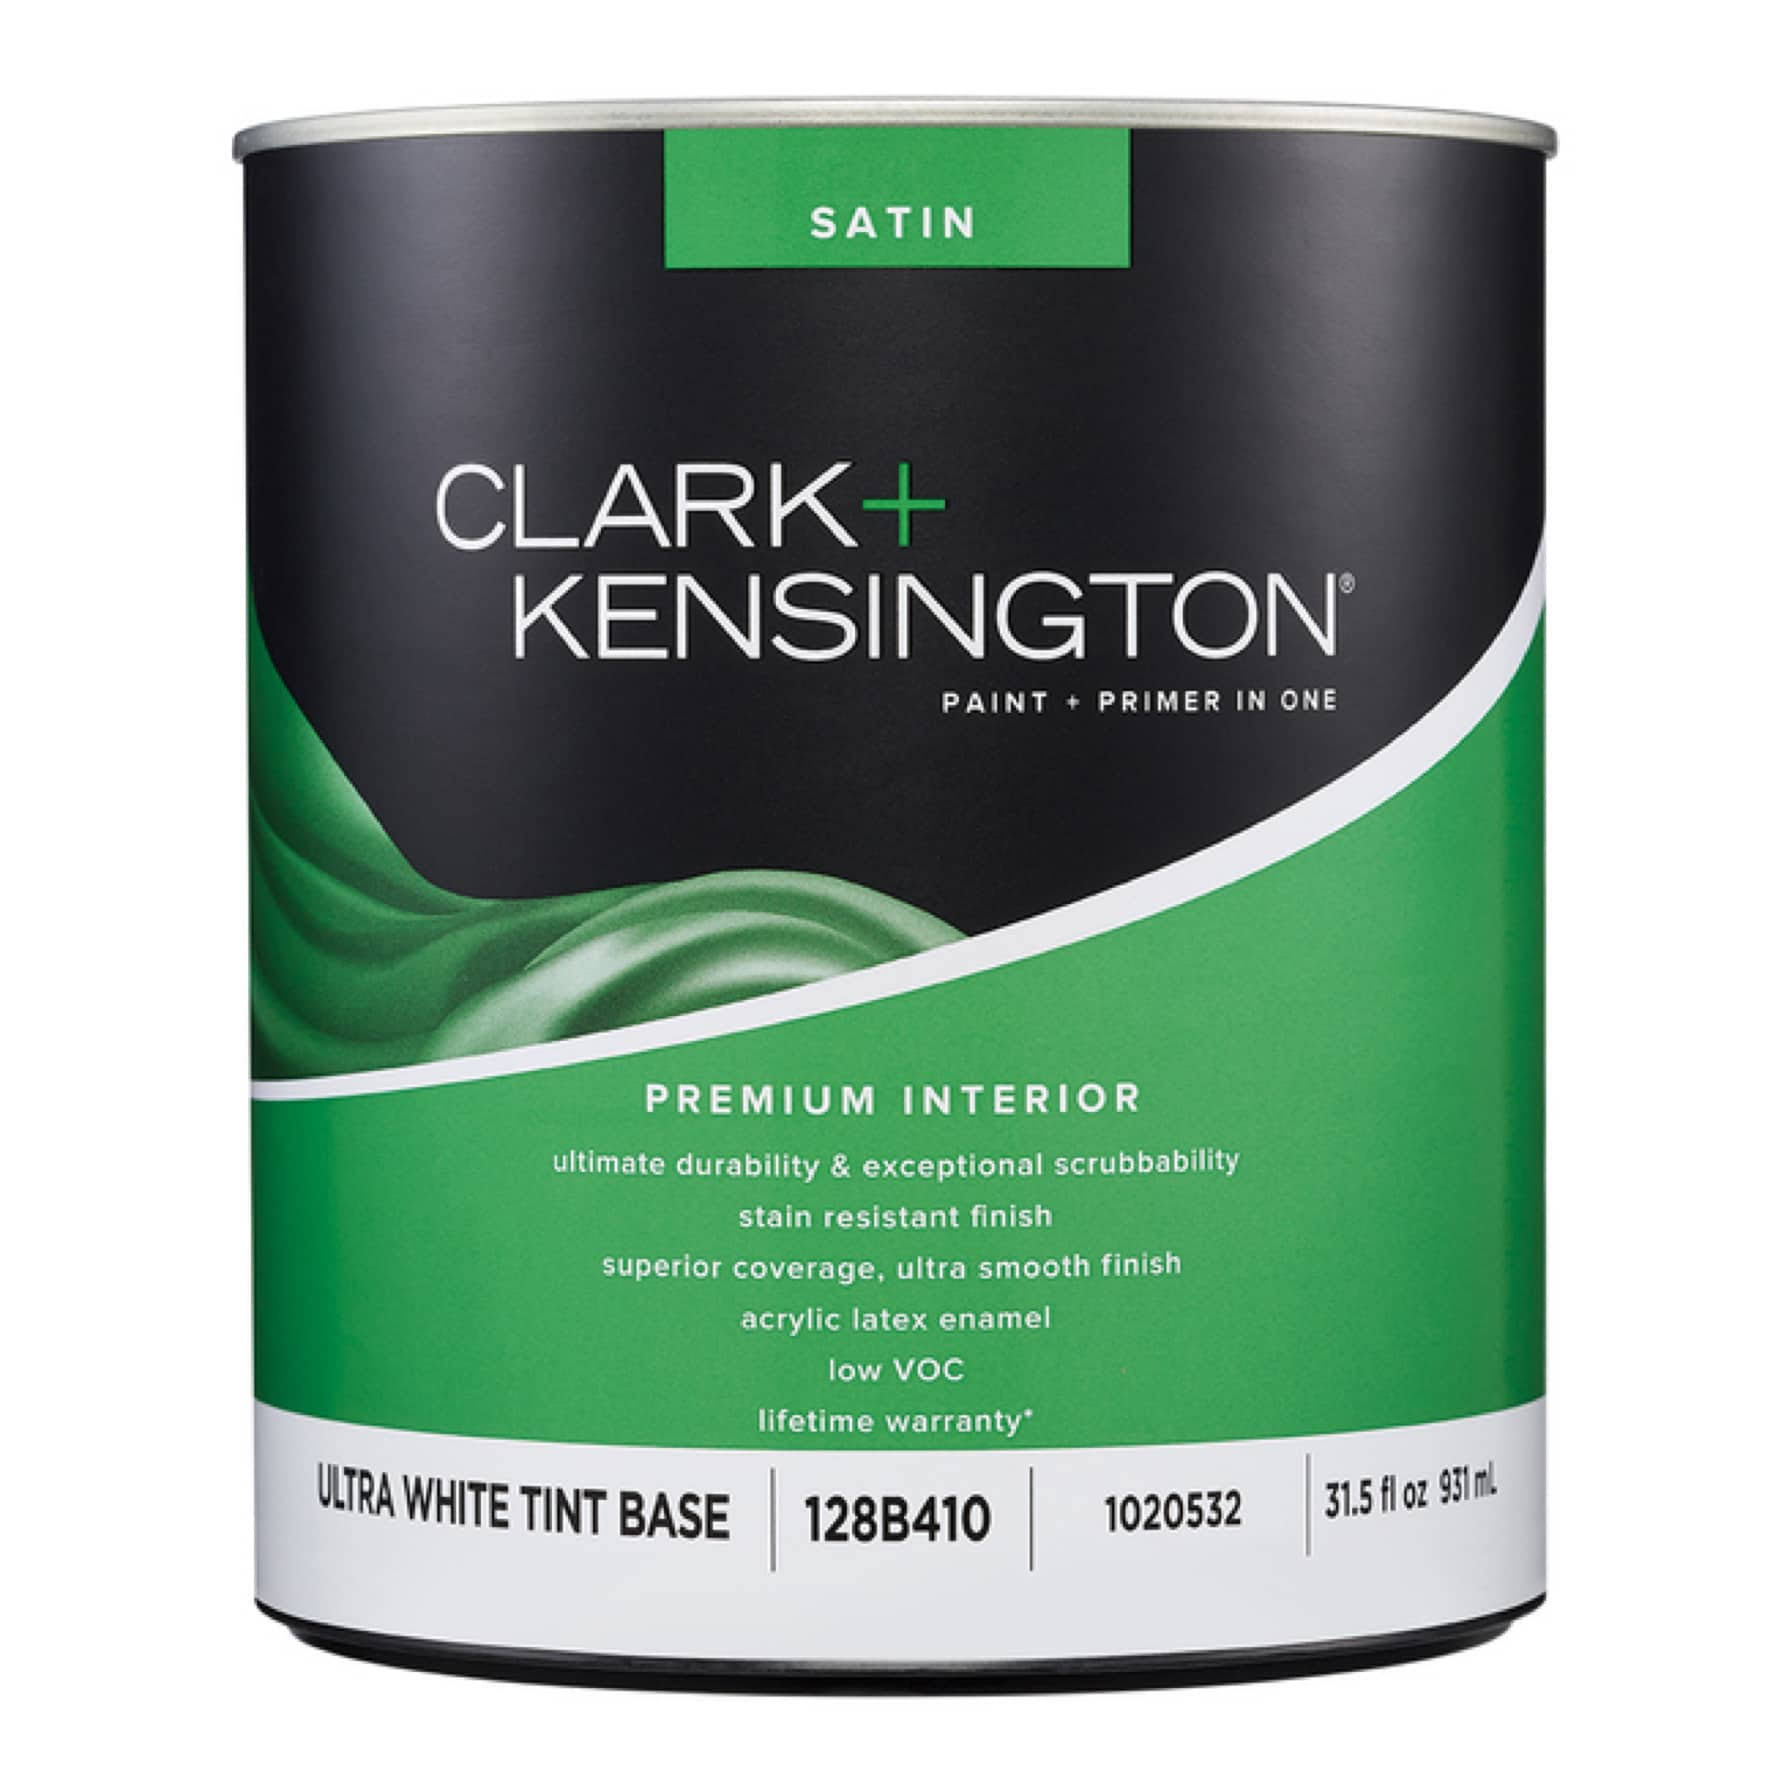 Clark+Kensington Satin Tint Base Ultra White Base Acrylic Latex Premium Paint Interior 1 qt.